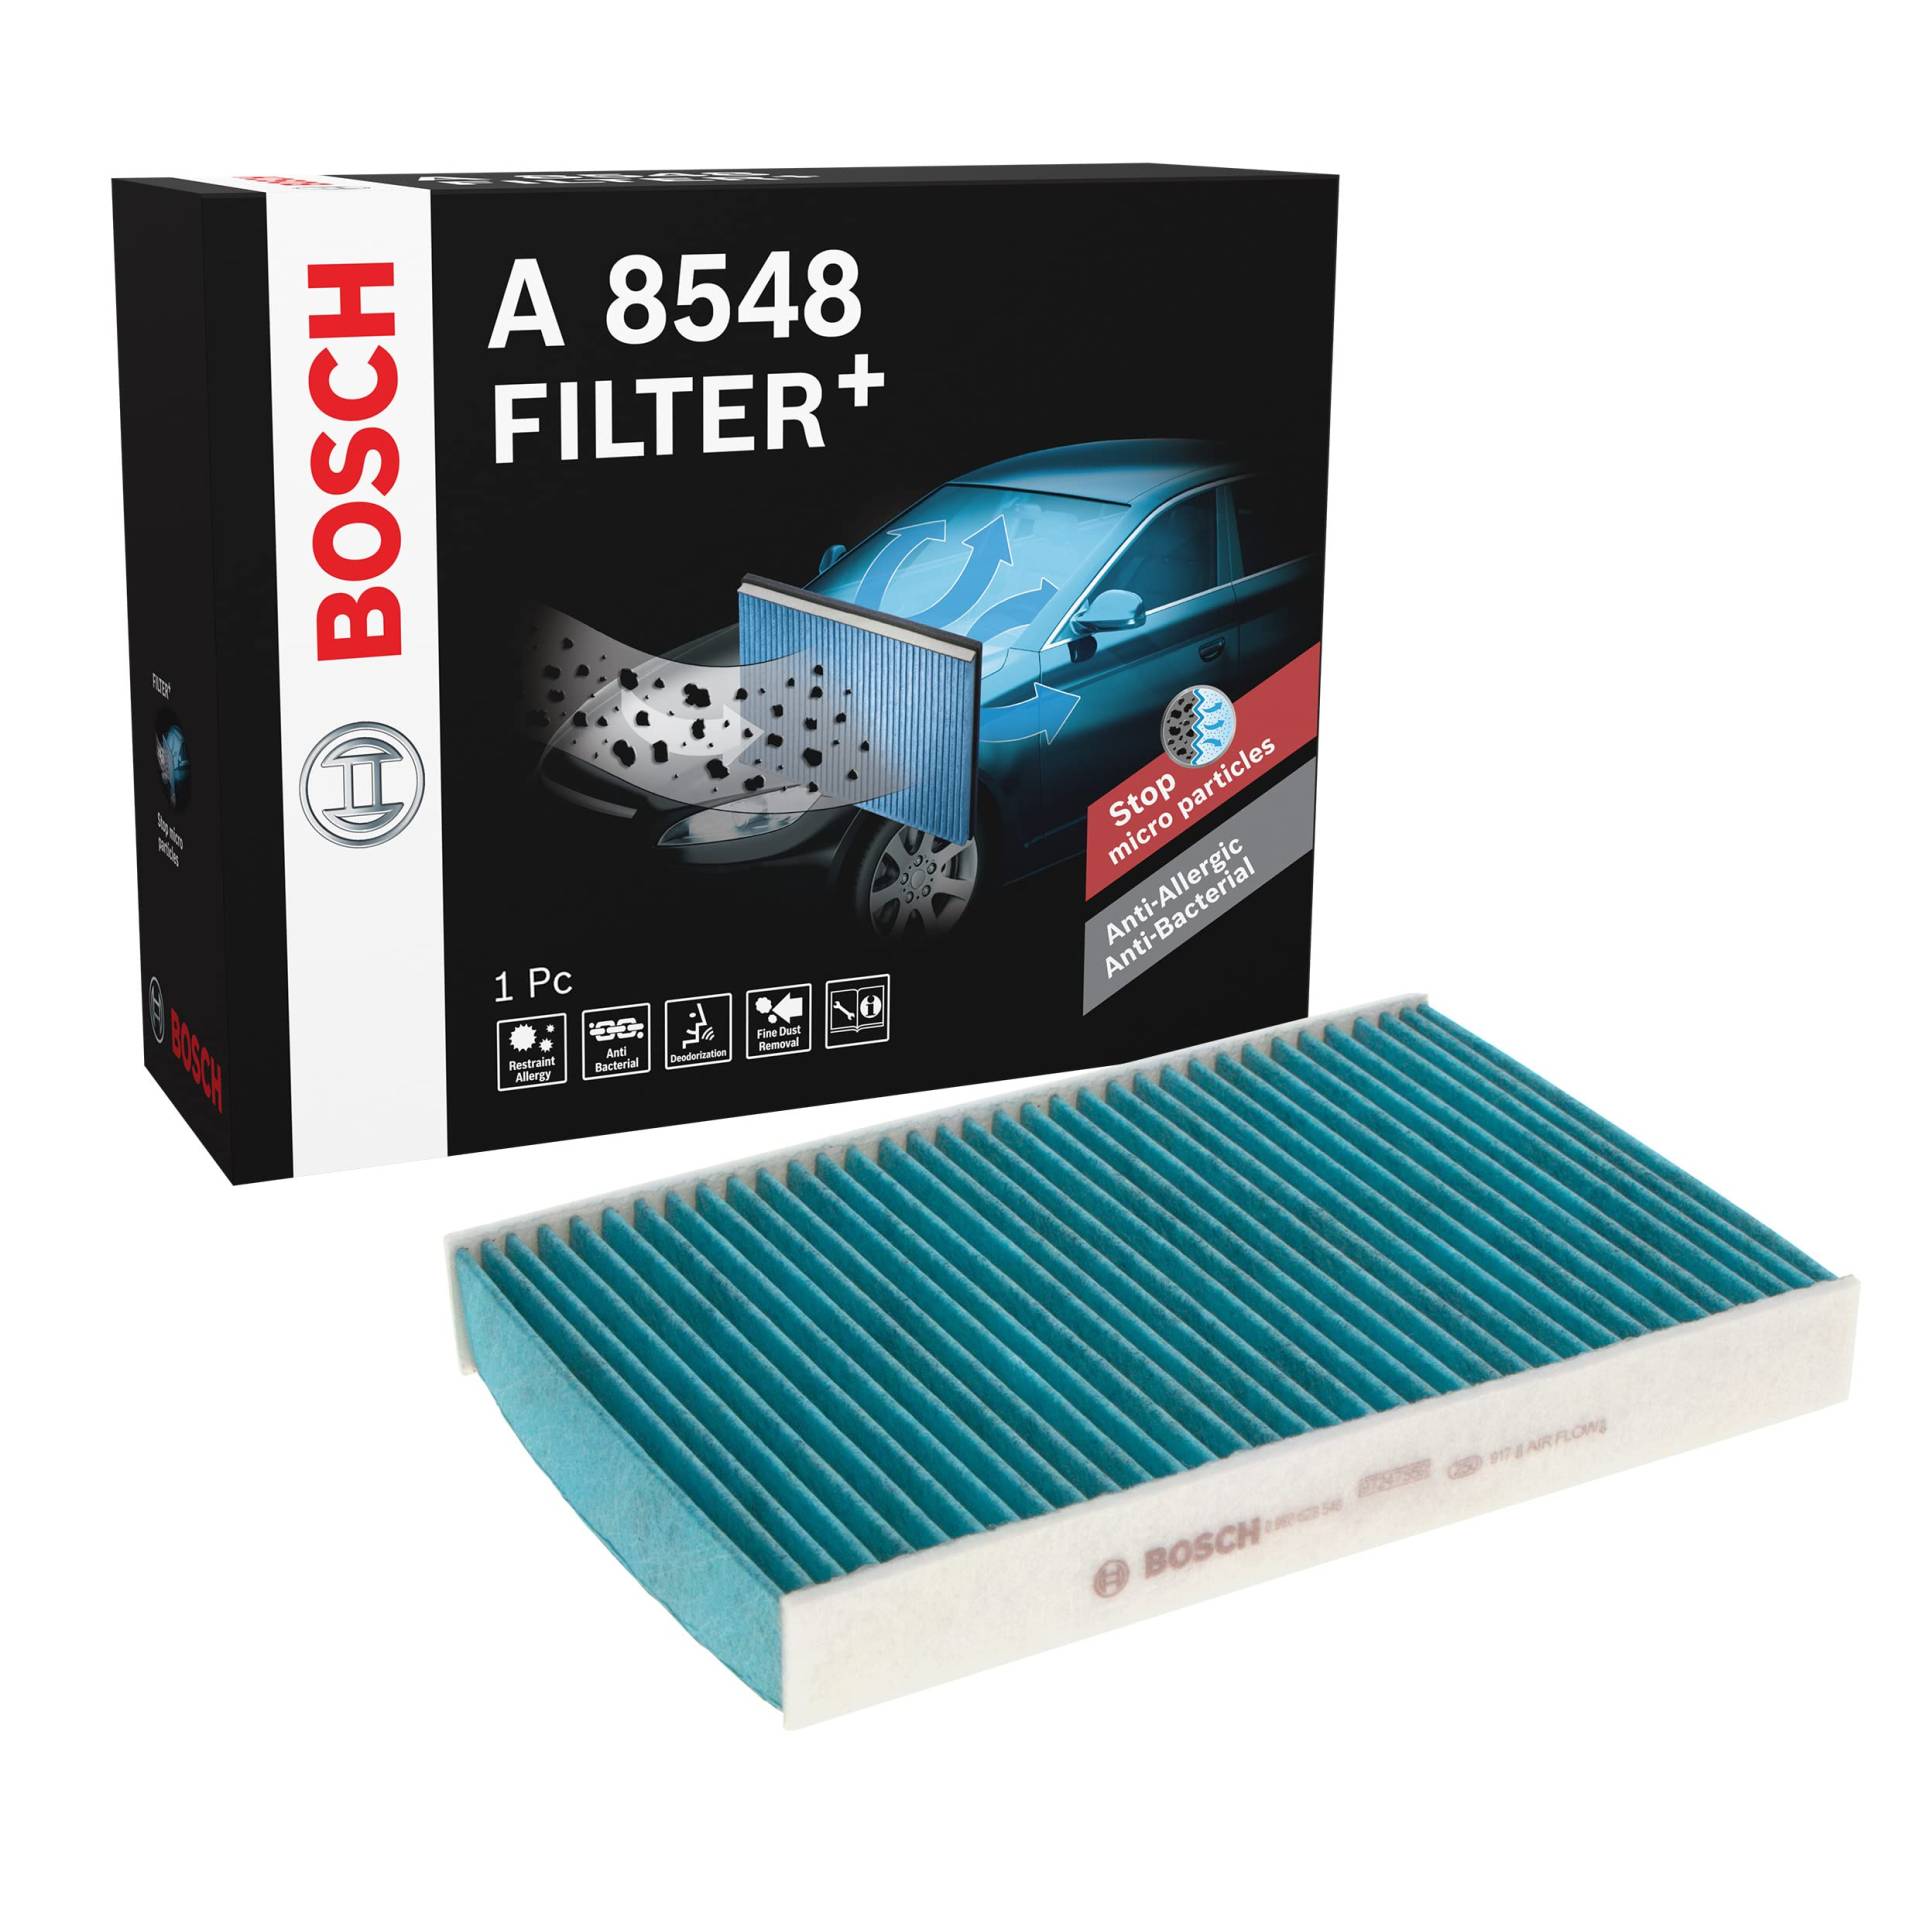 Bosch A8548 - Innenraumfilter Filter+ von Bosch Automotive